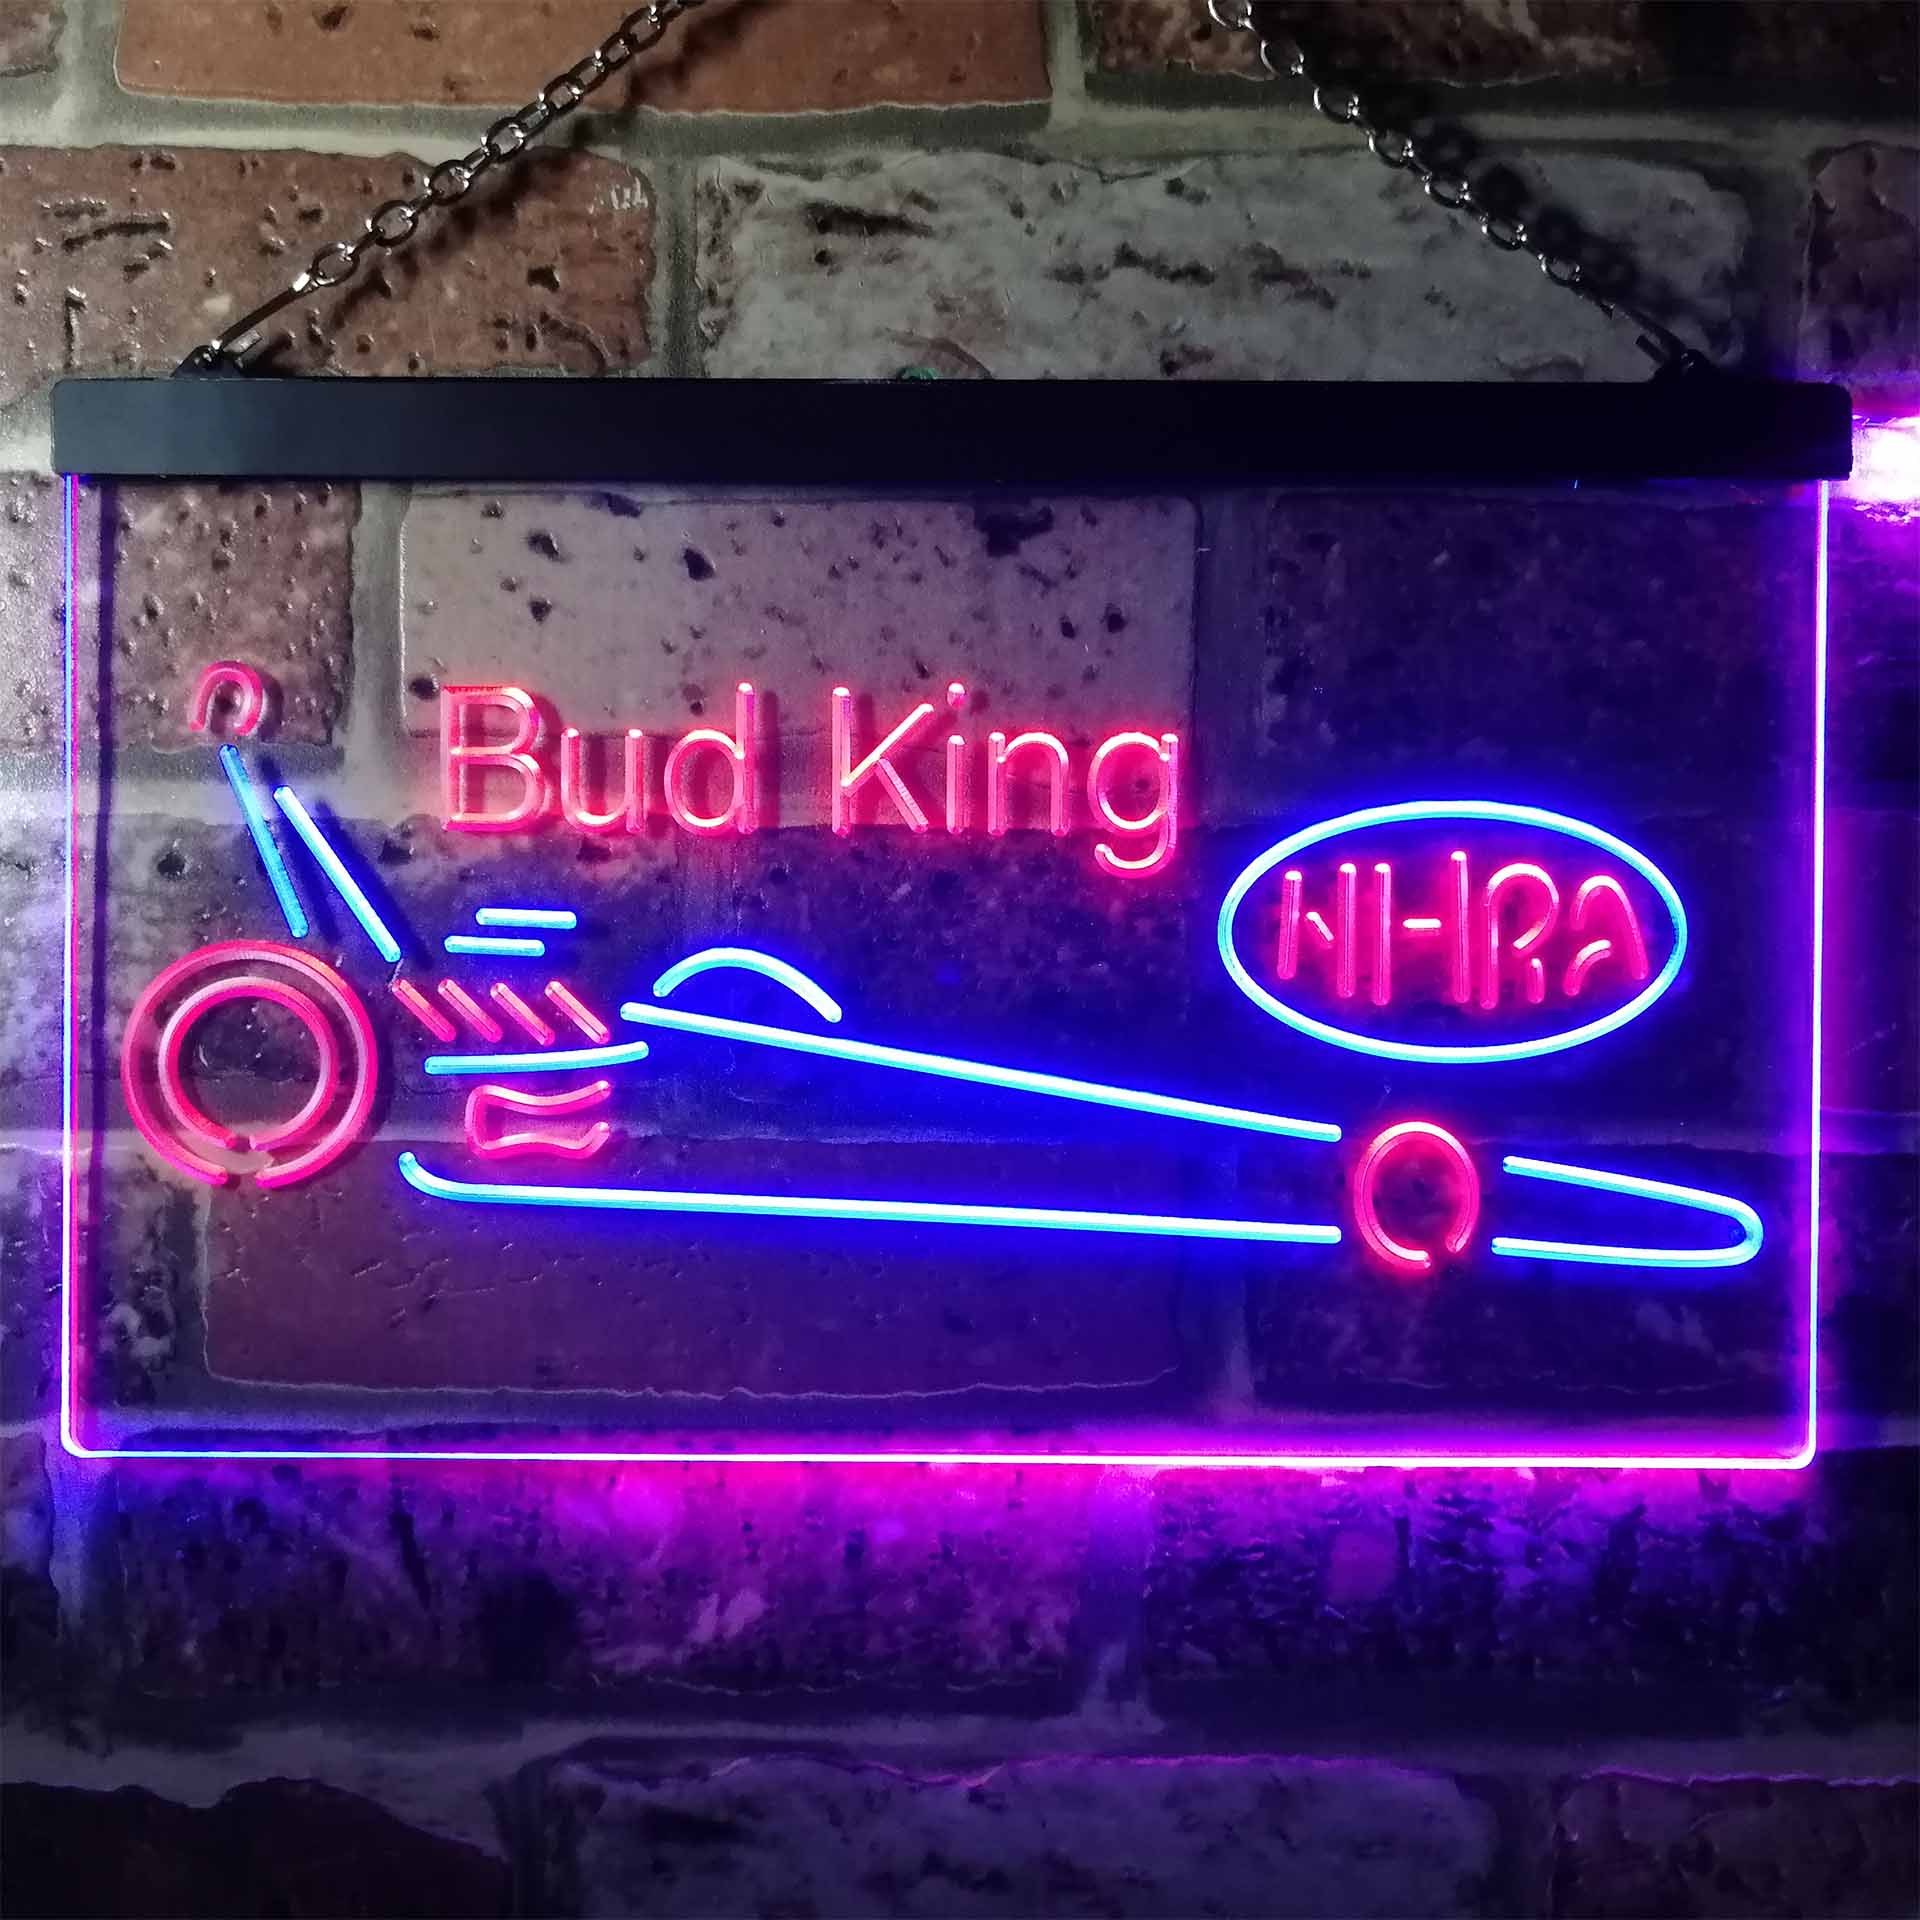 Bud King Nhra Dragster Dual Color LED Neon Sign ProLedSign